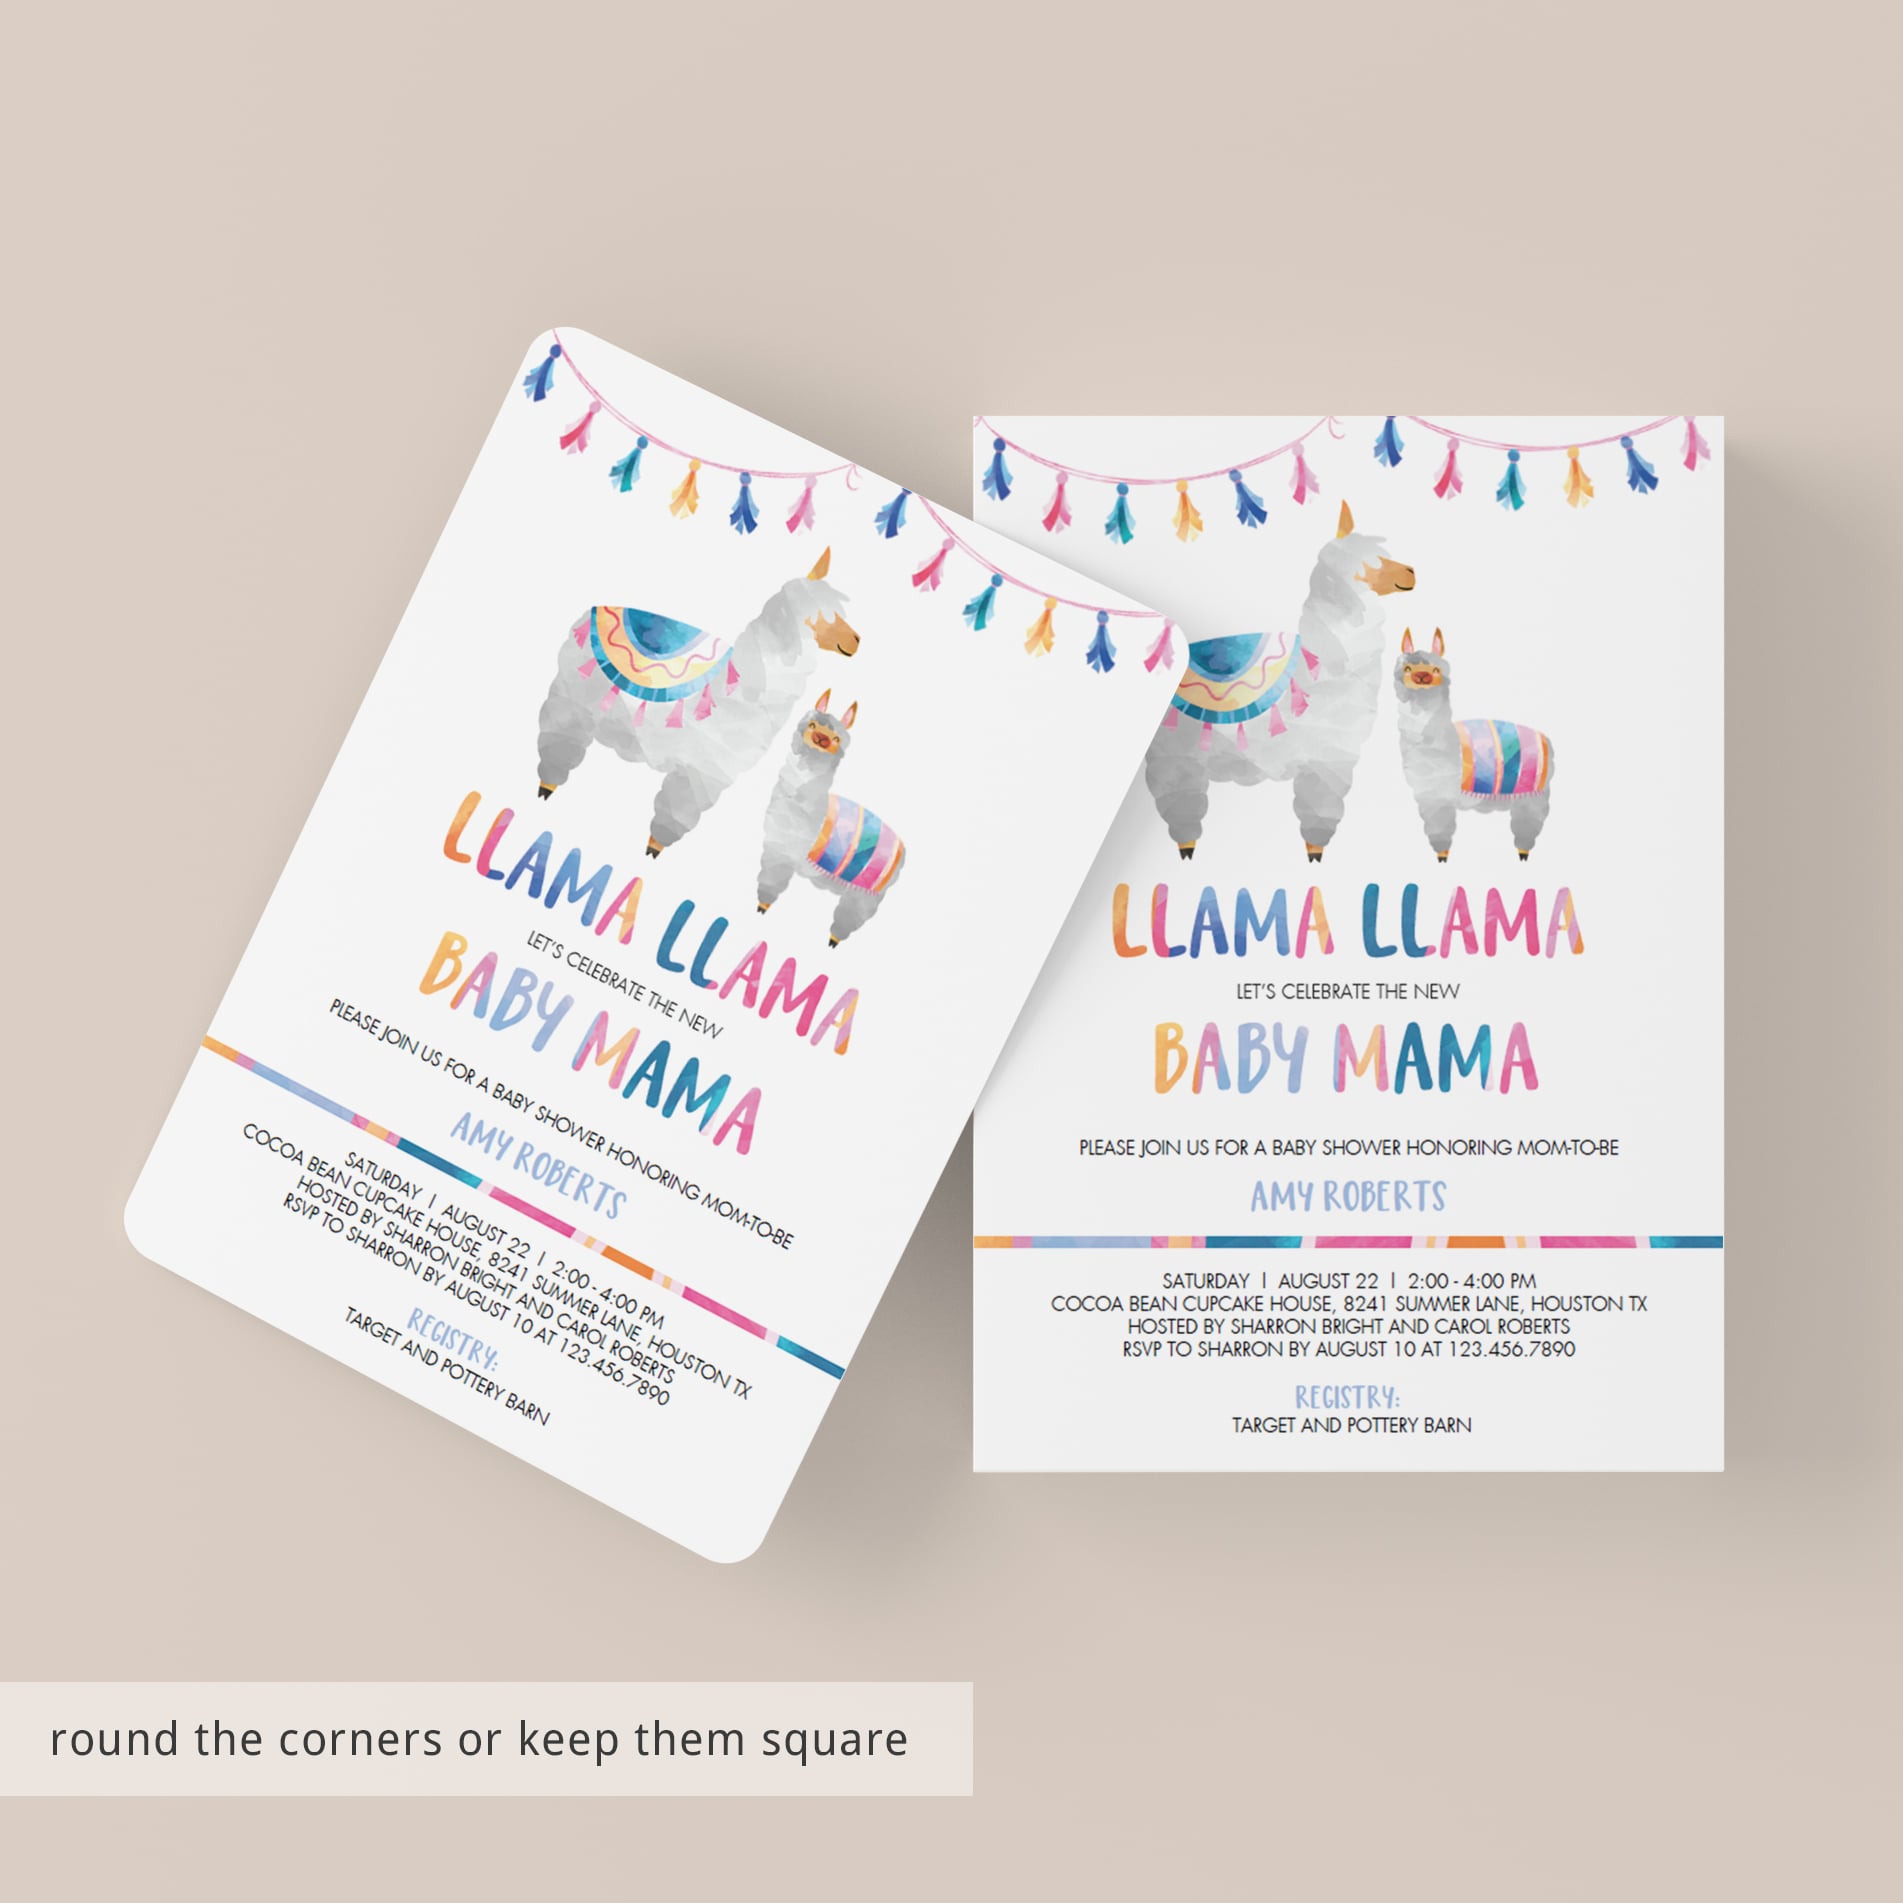 Llama mama baby shower invitations by LittleSizzle